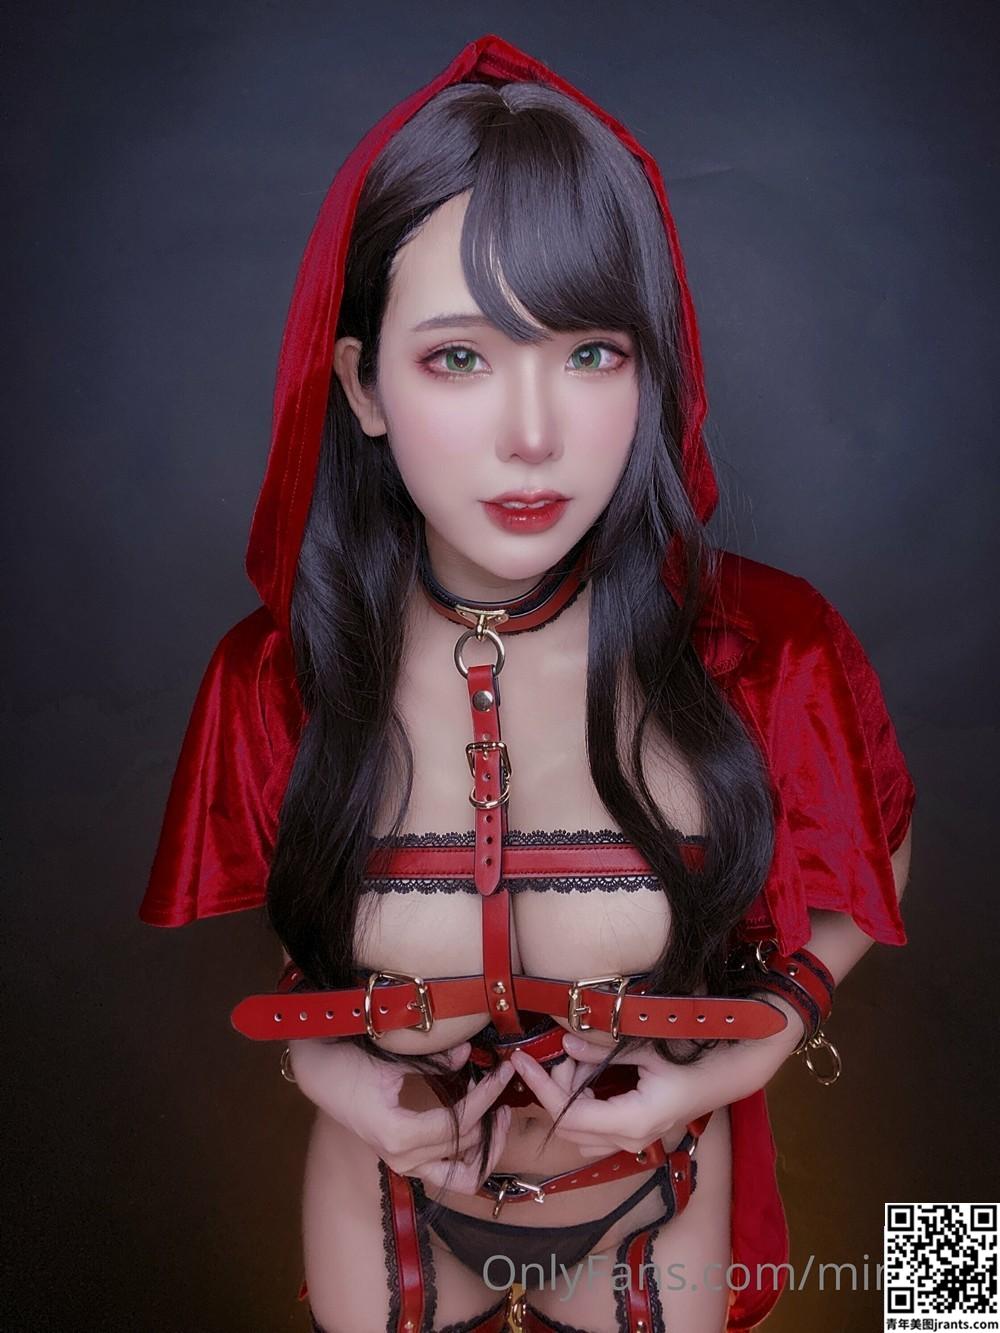 Minichu &#8211; Red Riding Hood